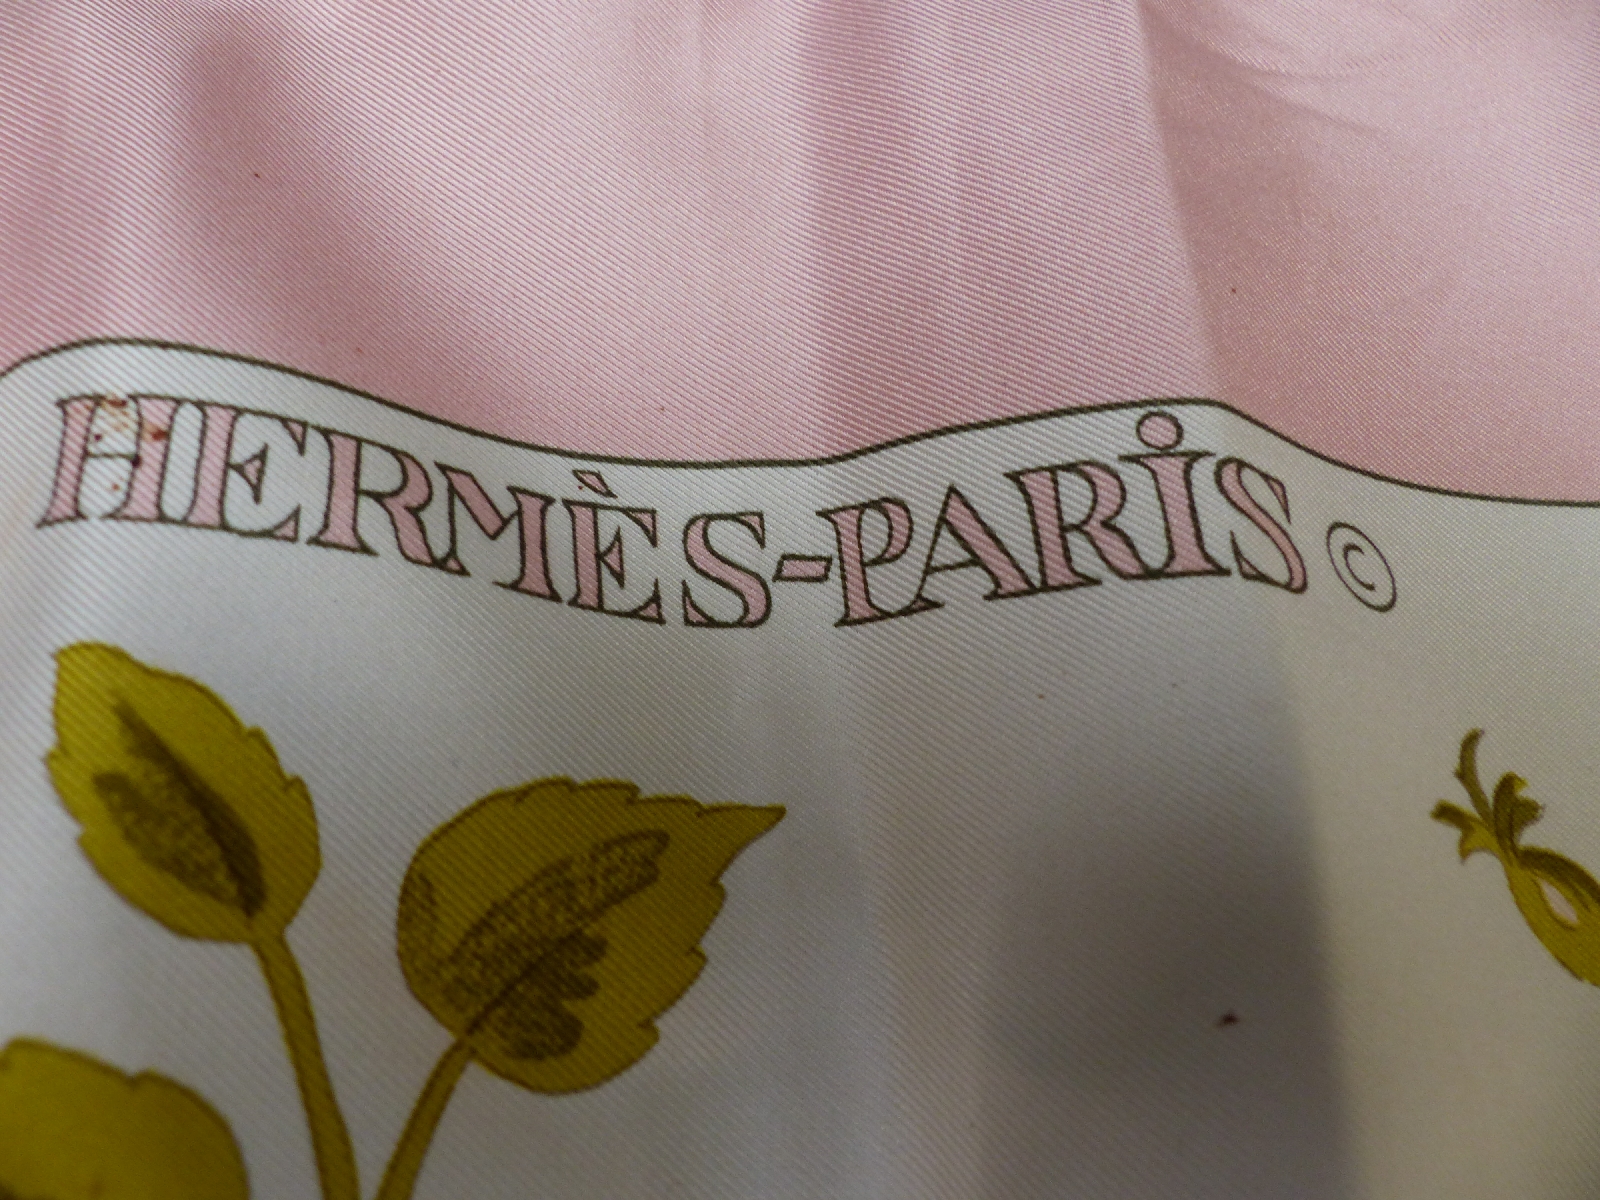 Hermes 'Romantique' silk scarf and an Etro Italian silk chiffon example - Image 4 of 5